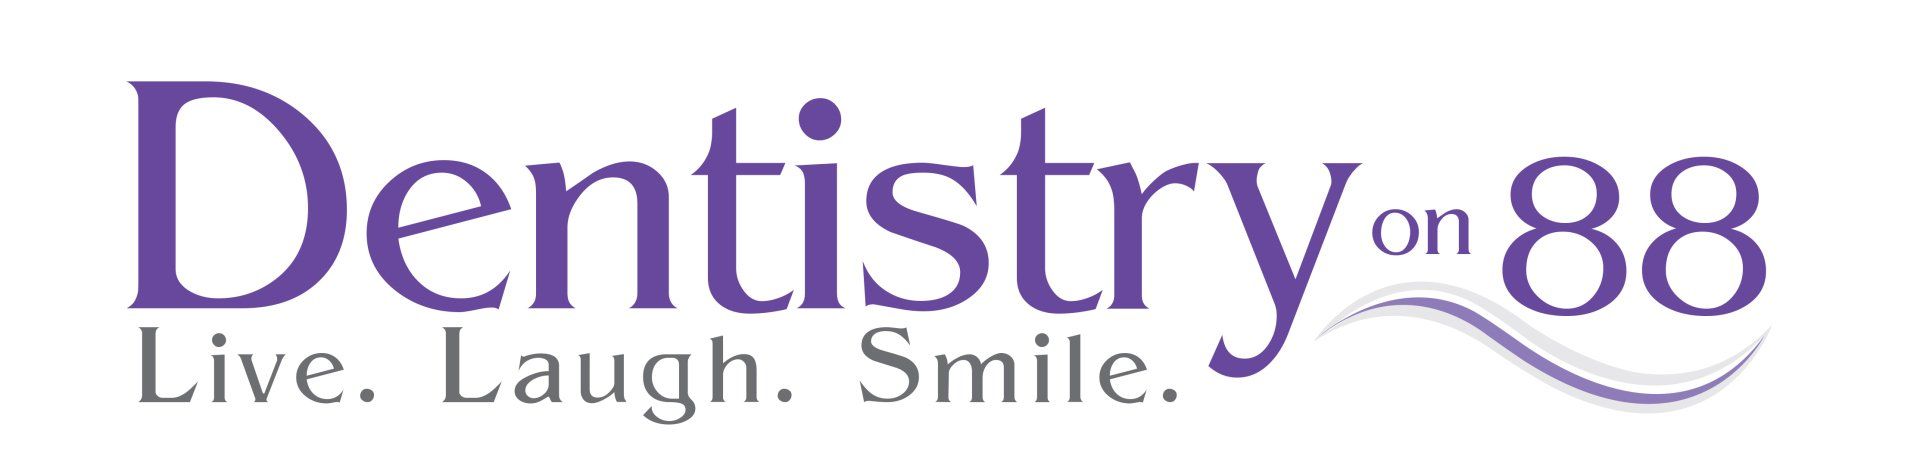 Dentistry on 88 logo